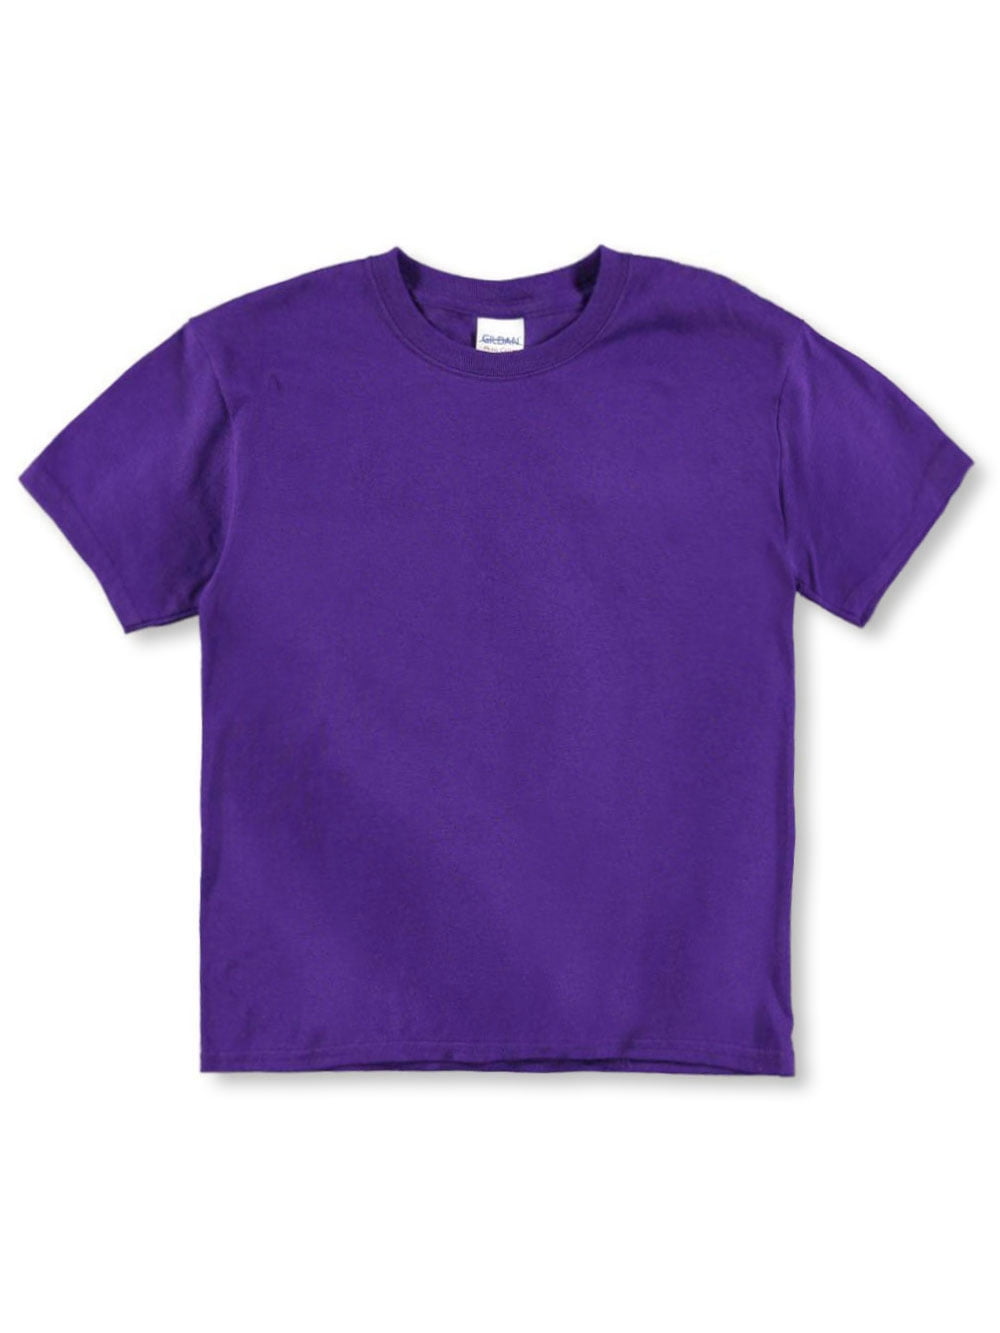 Gildan Unisex Youth T-Shirt - burgundy, s/6-8 (Little Girls)